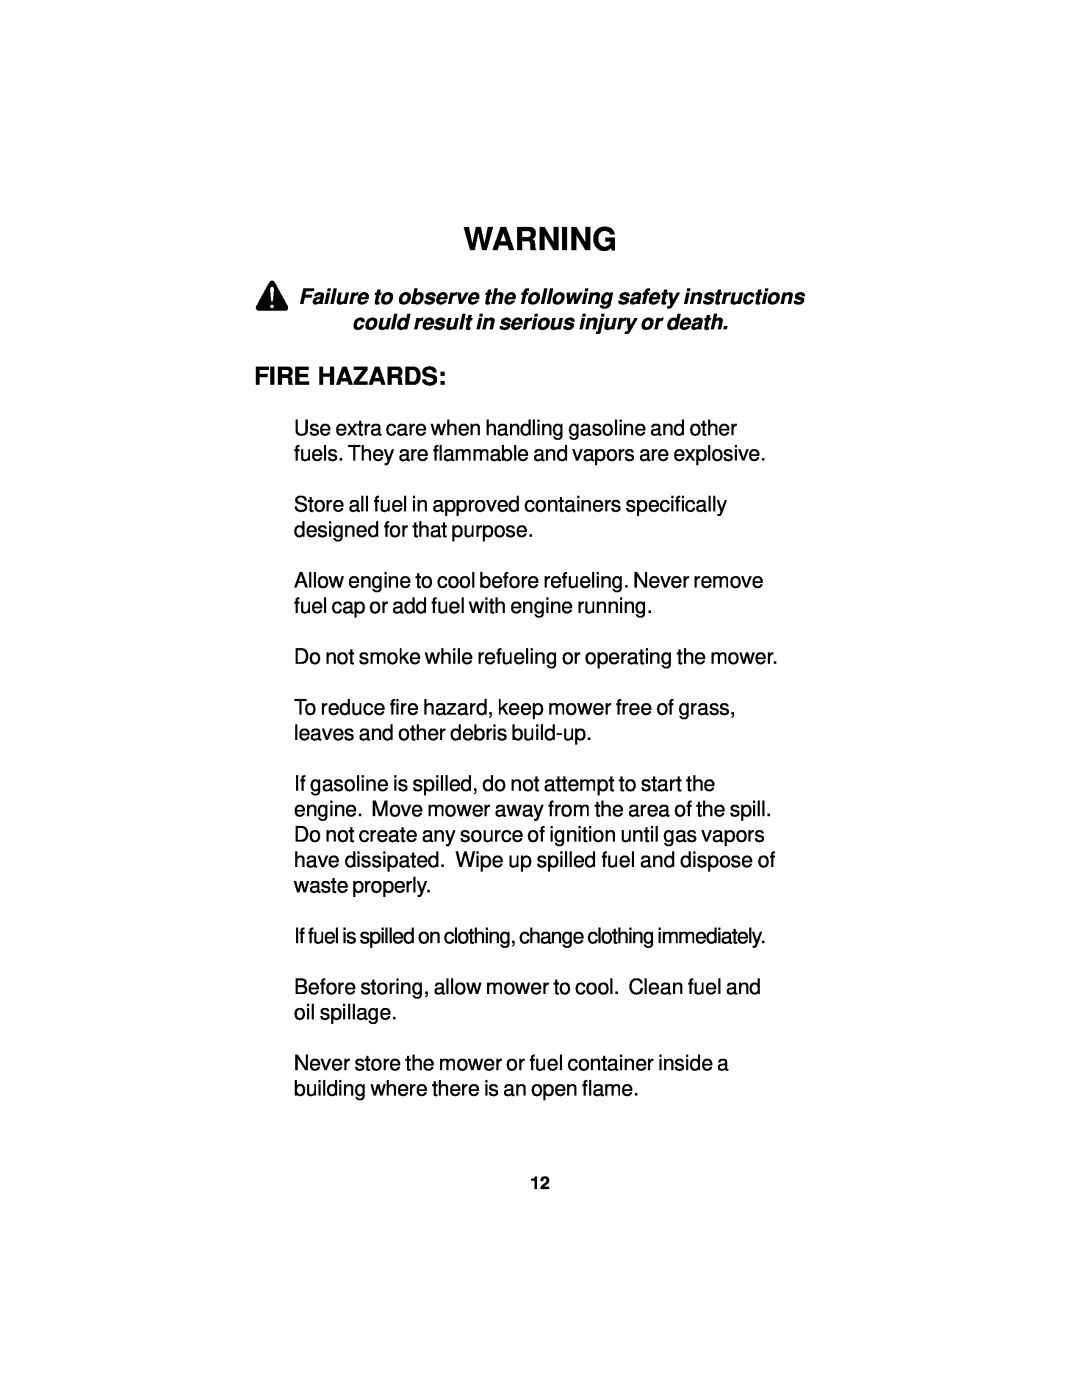 Dixon 14295-0804 manual Fire Hazards 